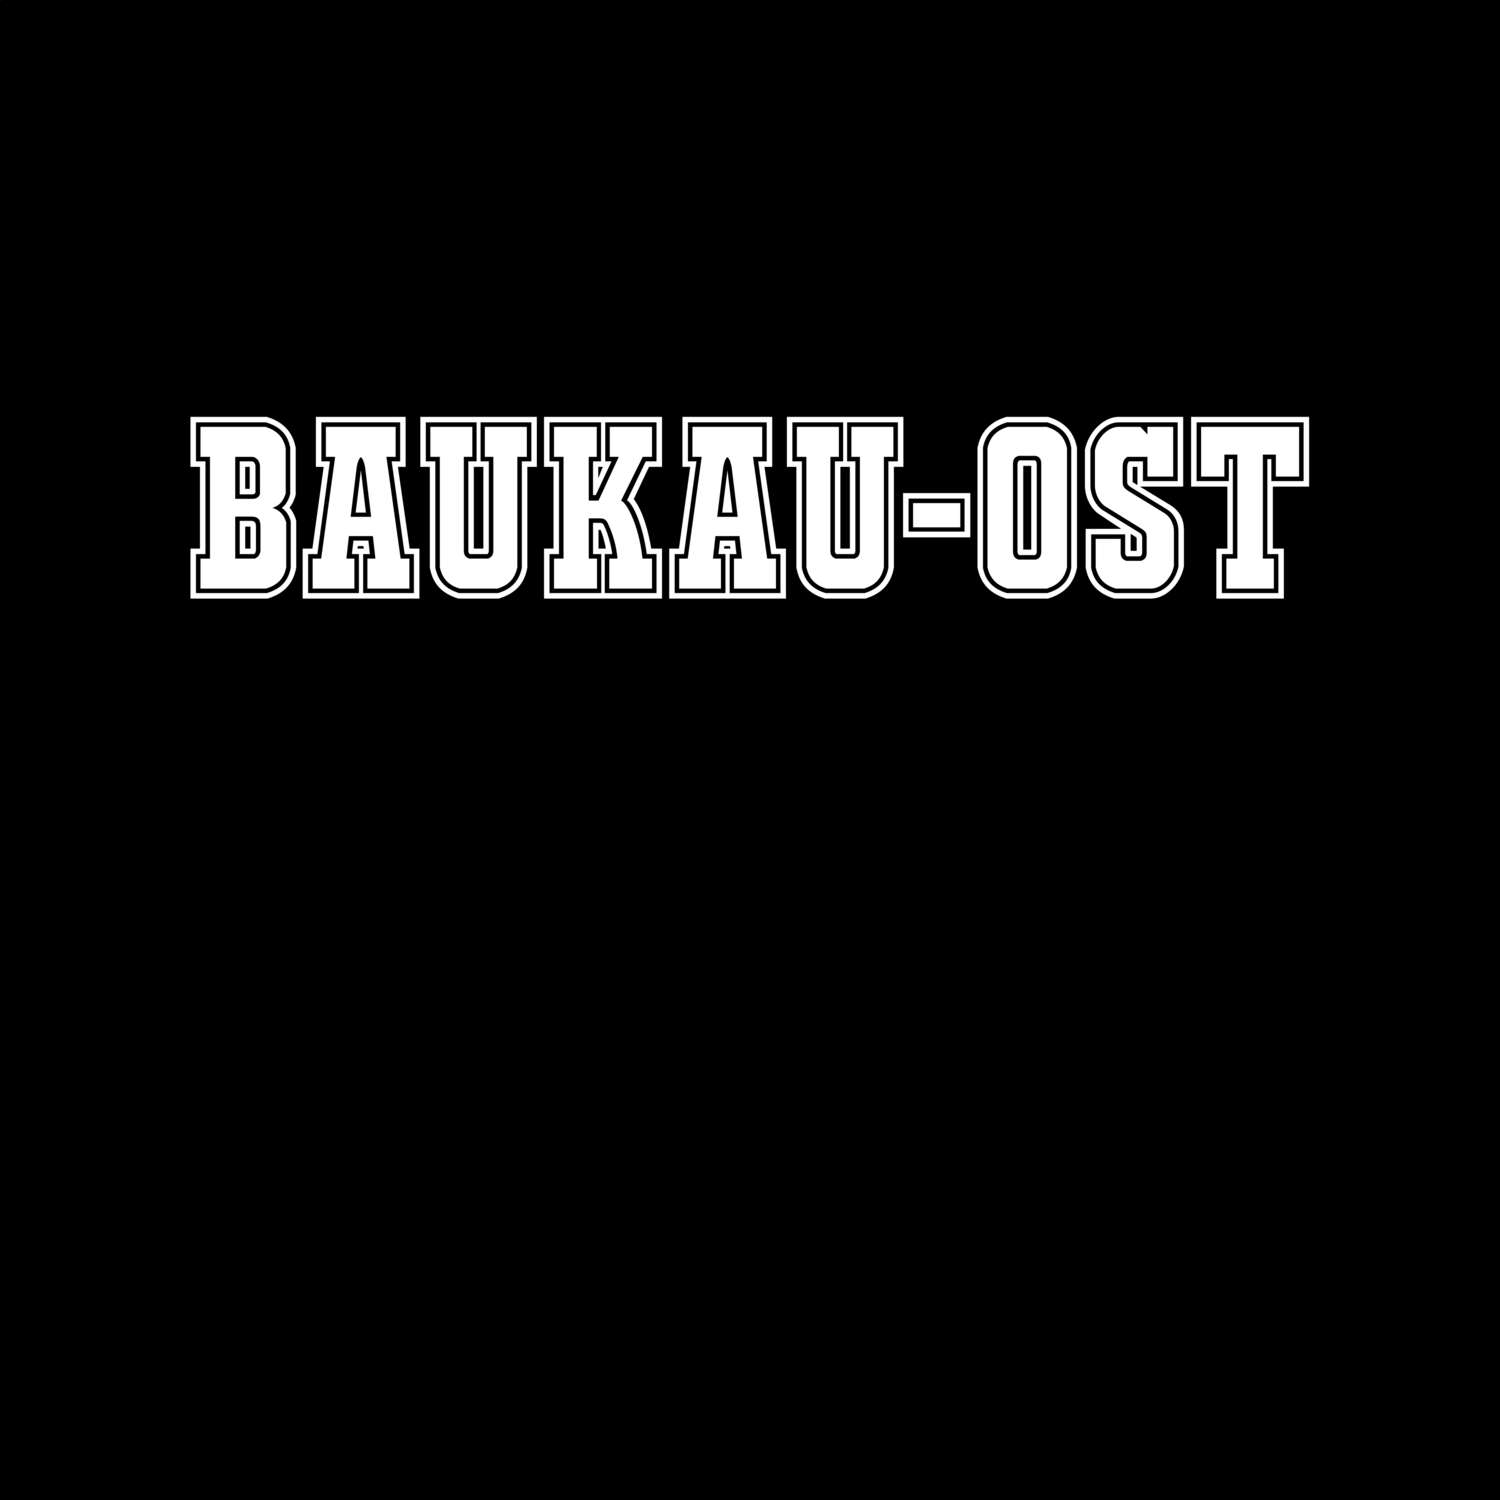 Baukau-Ost T-Shirt »Classic«